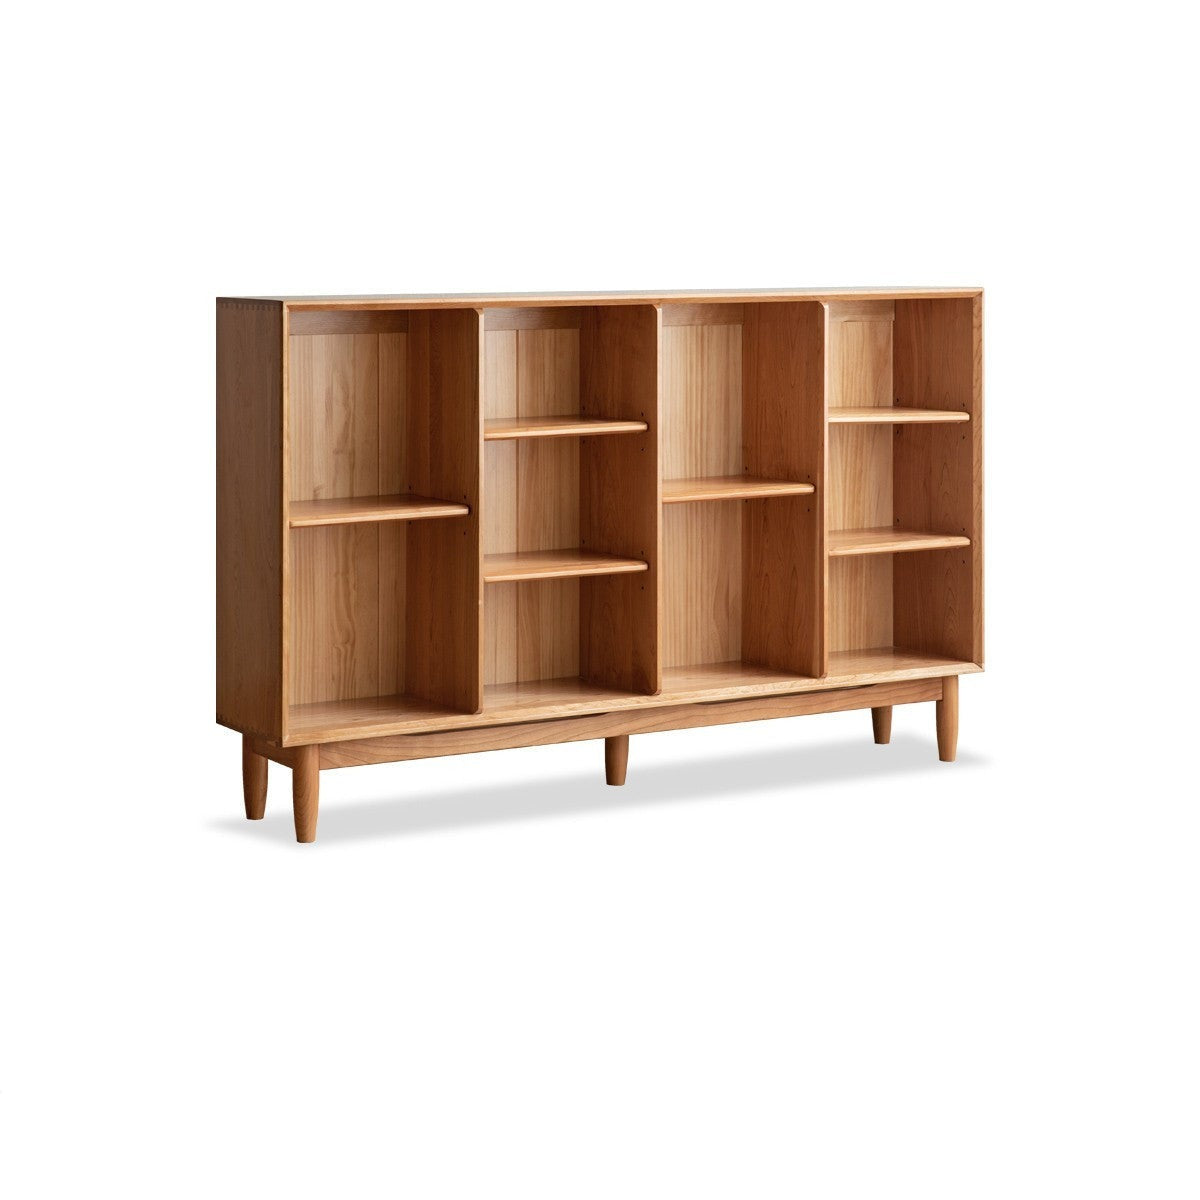 Oak solid wood low bookshelf"